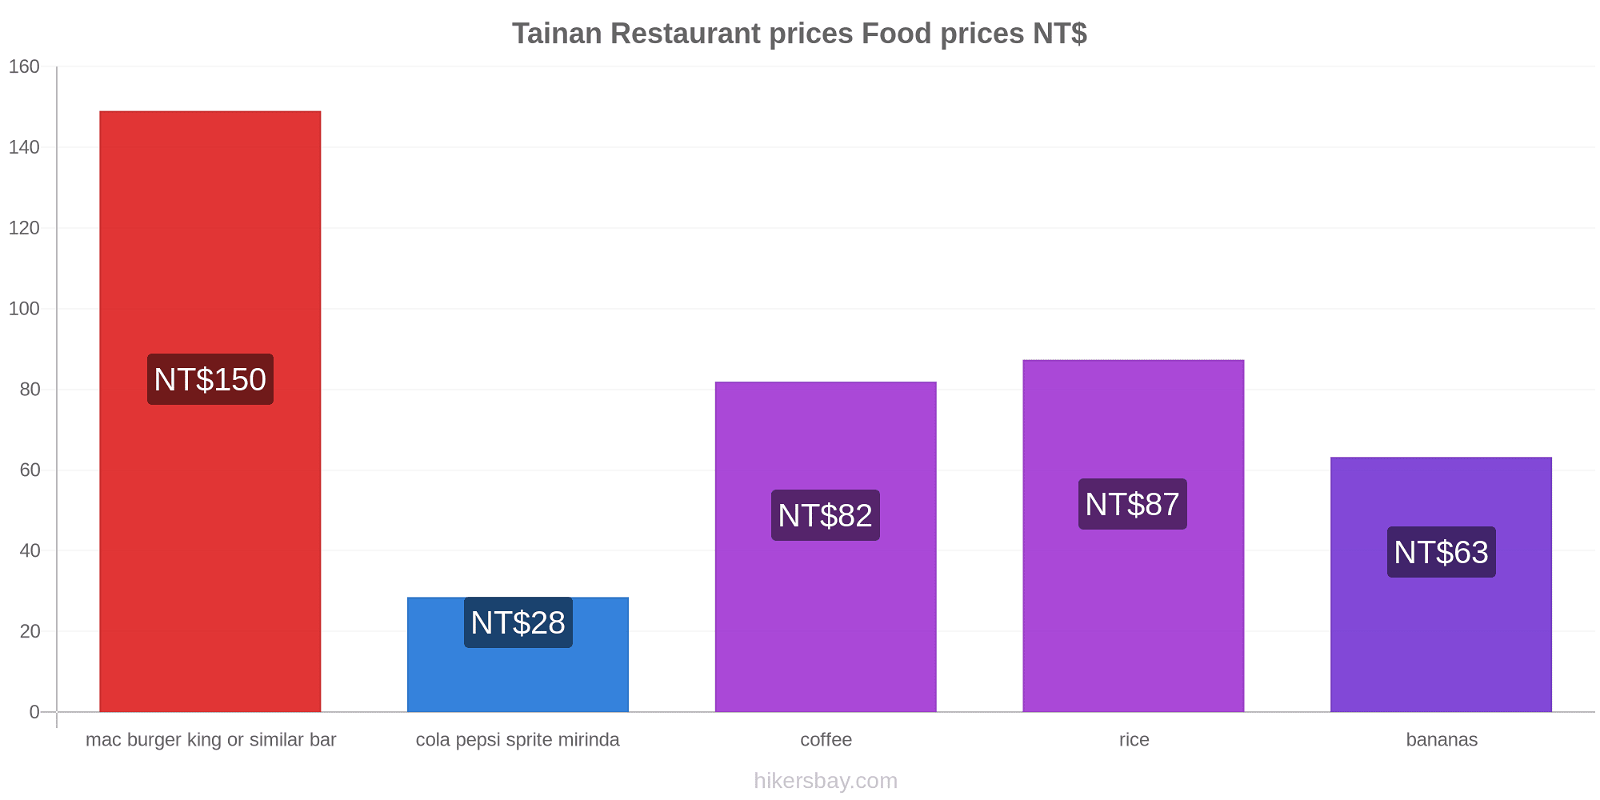 Tainan price changes hikersbay.com